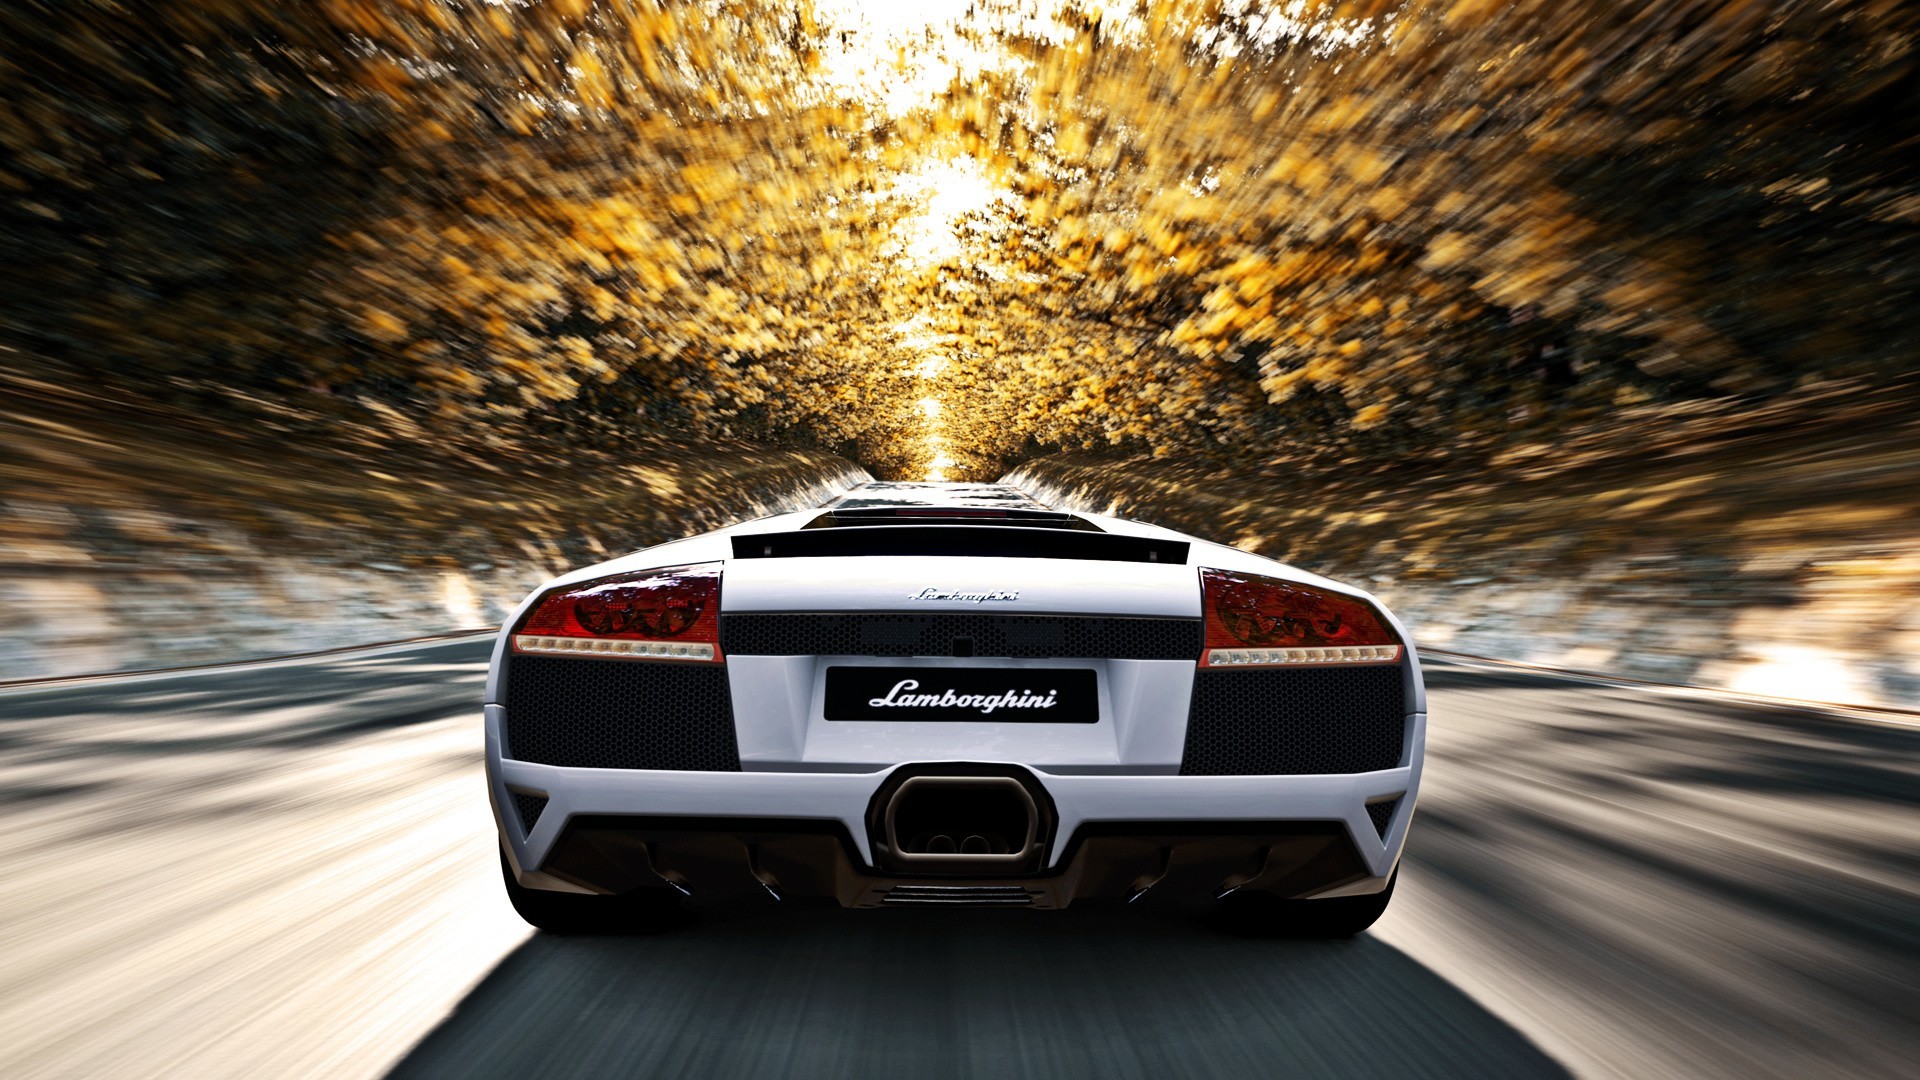 1920x1080 ... Beautiful HDQ Cover Photos of Lamborghini Murcielago,  ...